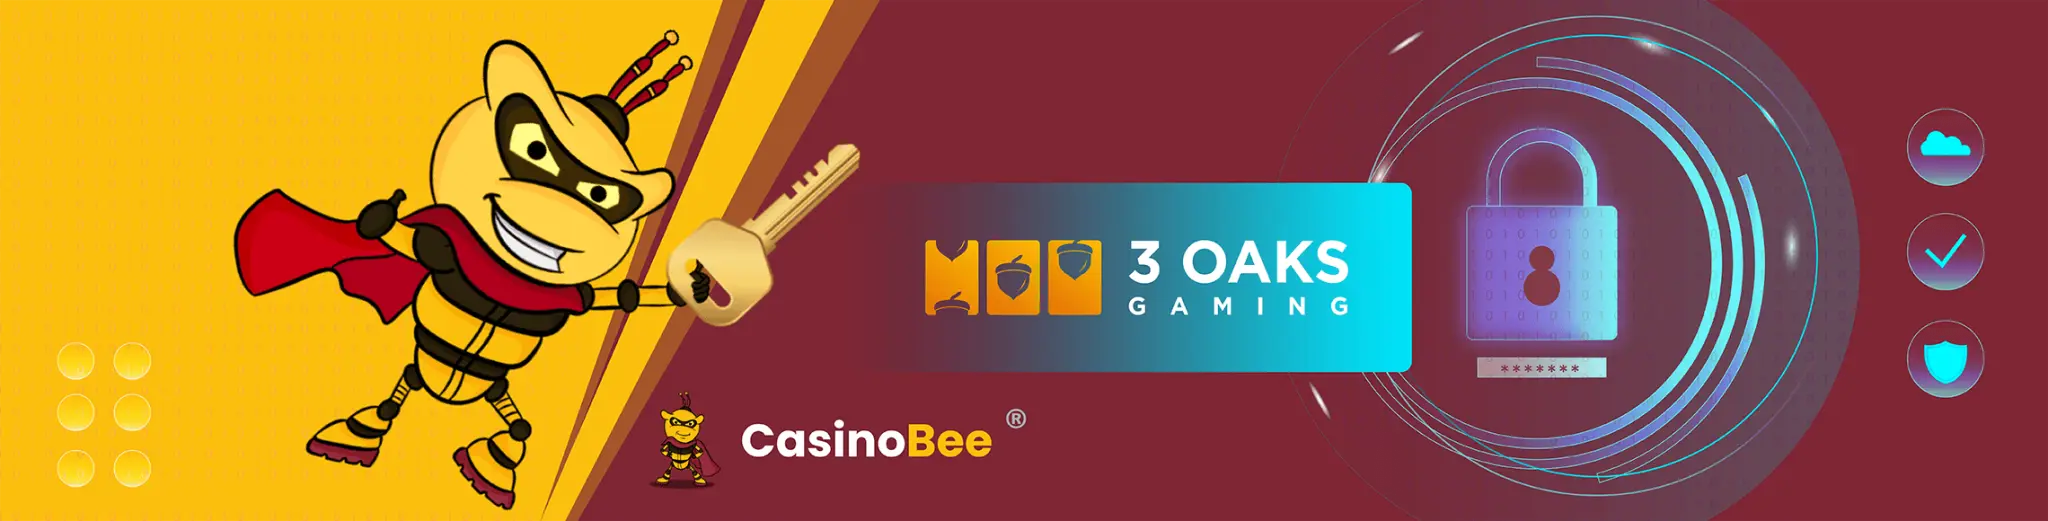 3 oaks gaming casino games